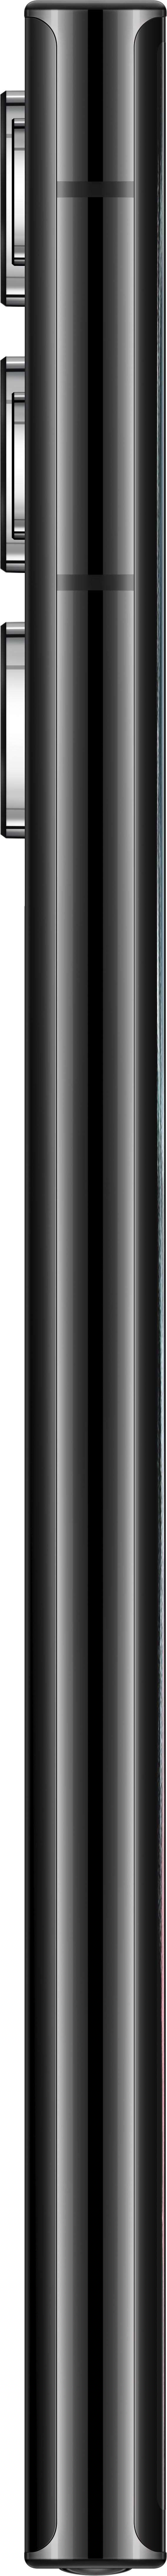 Samsung Galaxy S22 Ultra 128GB (Unlocked) Phantom Black SM